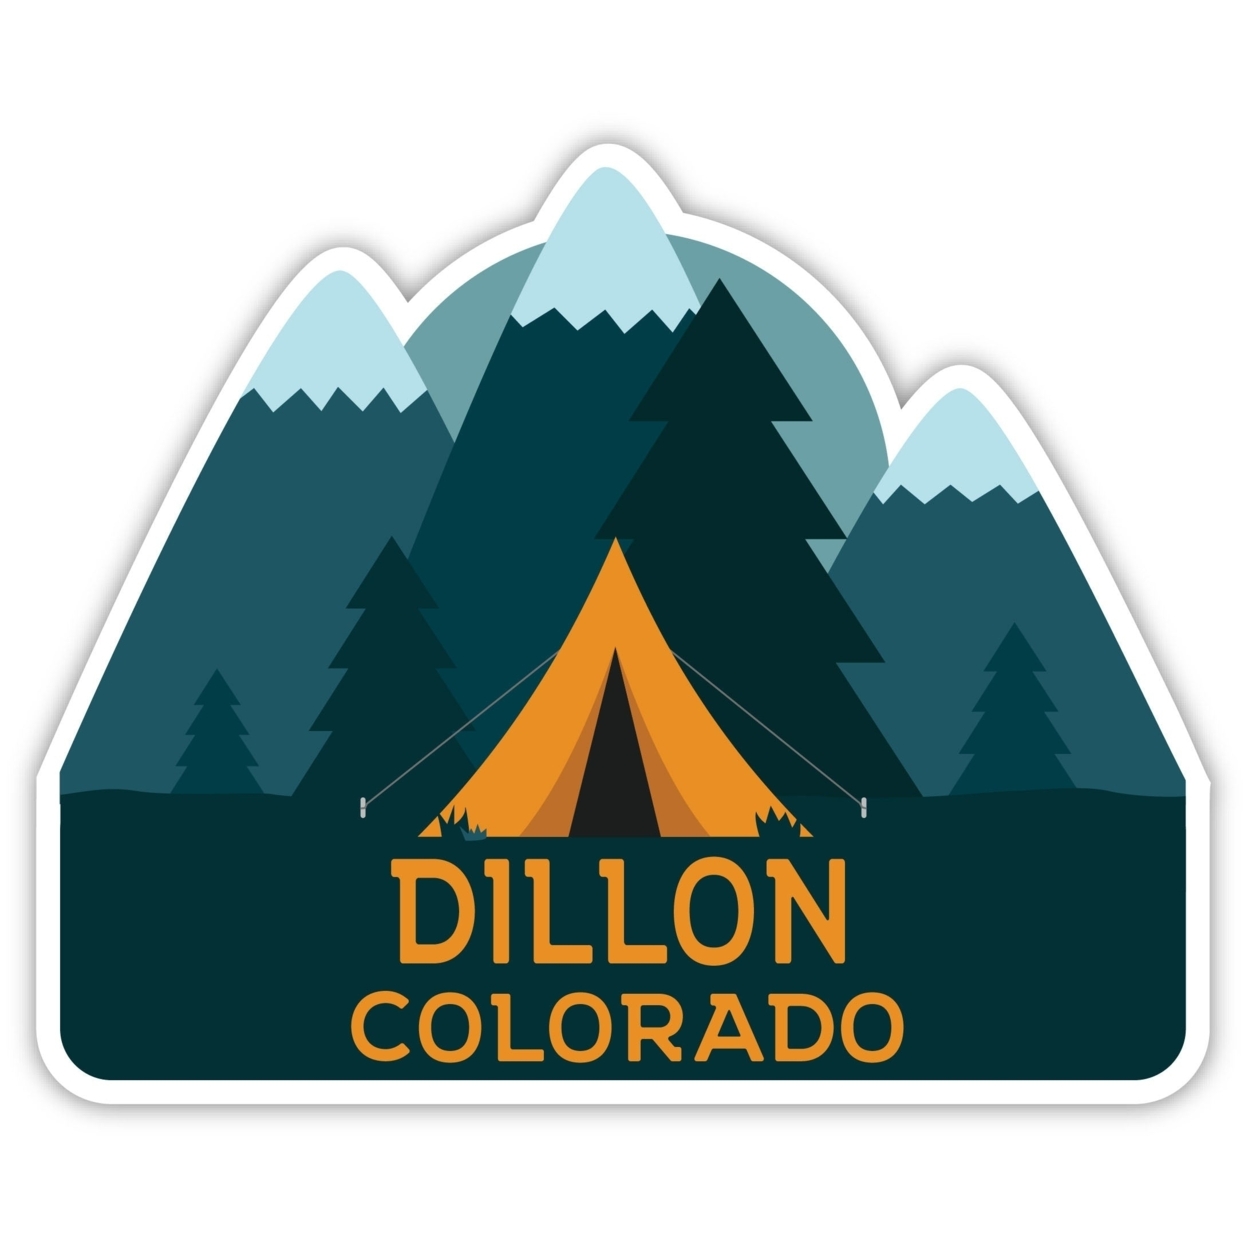 Dillon Colorado Souvenir Decorative Stickers (Choose Theme And Size) - 4-Pack, 12-Inch, Adventures Awaits